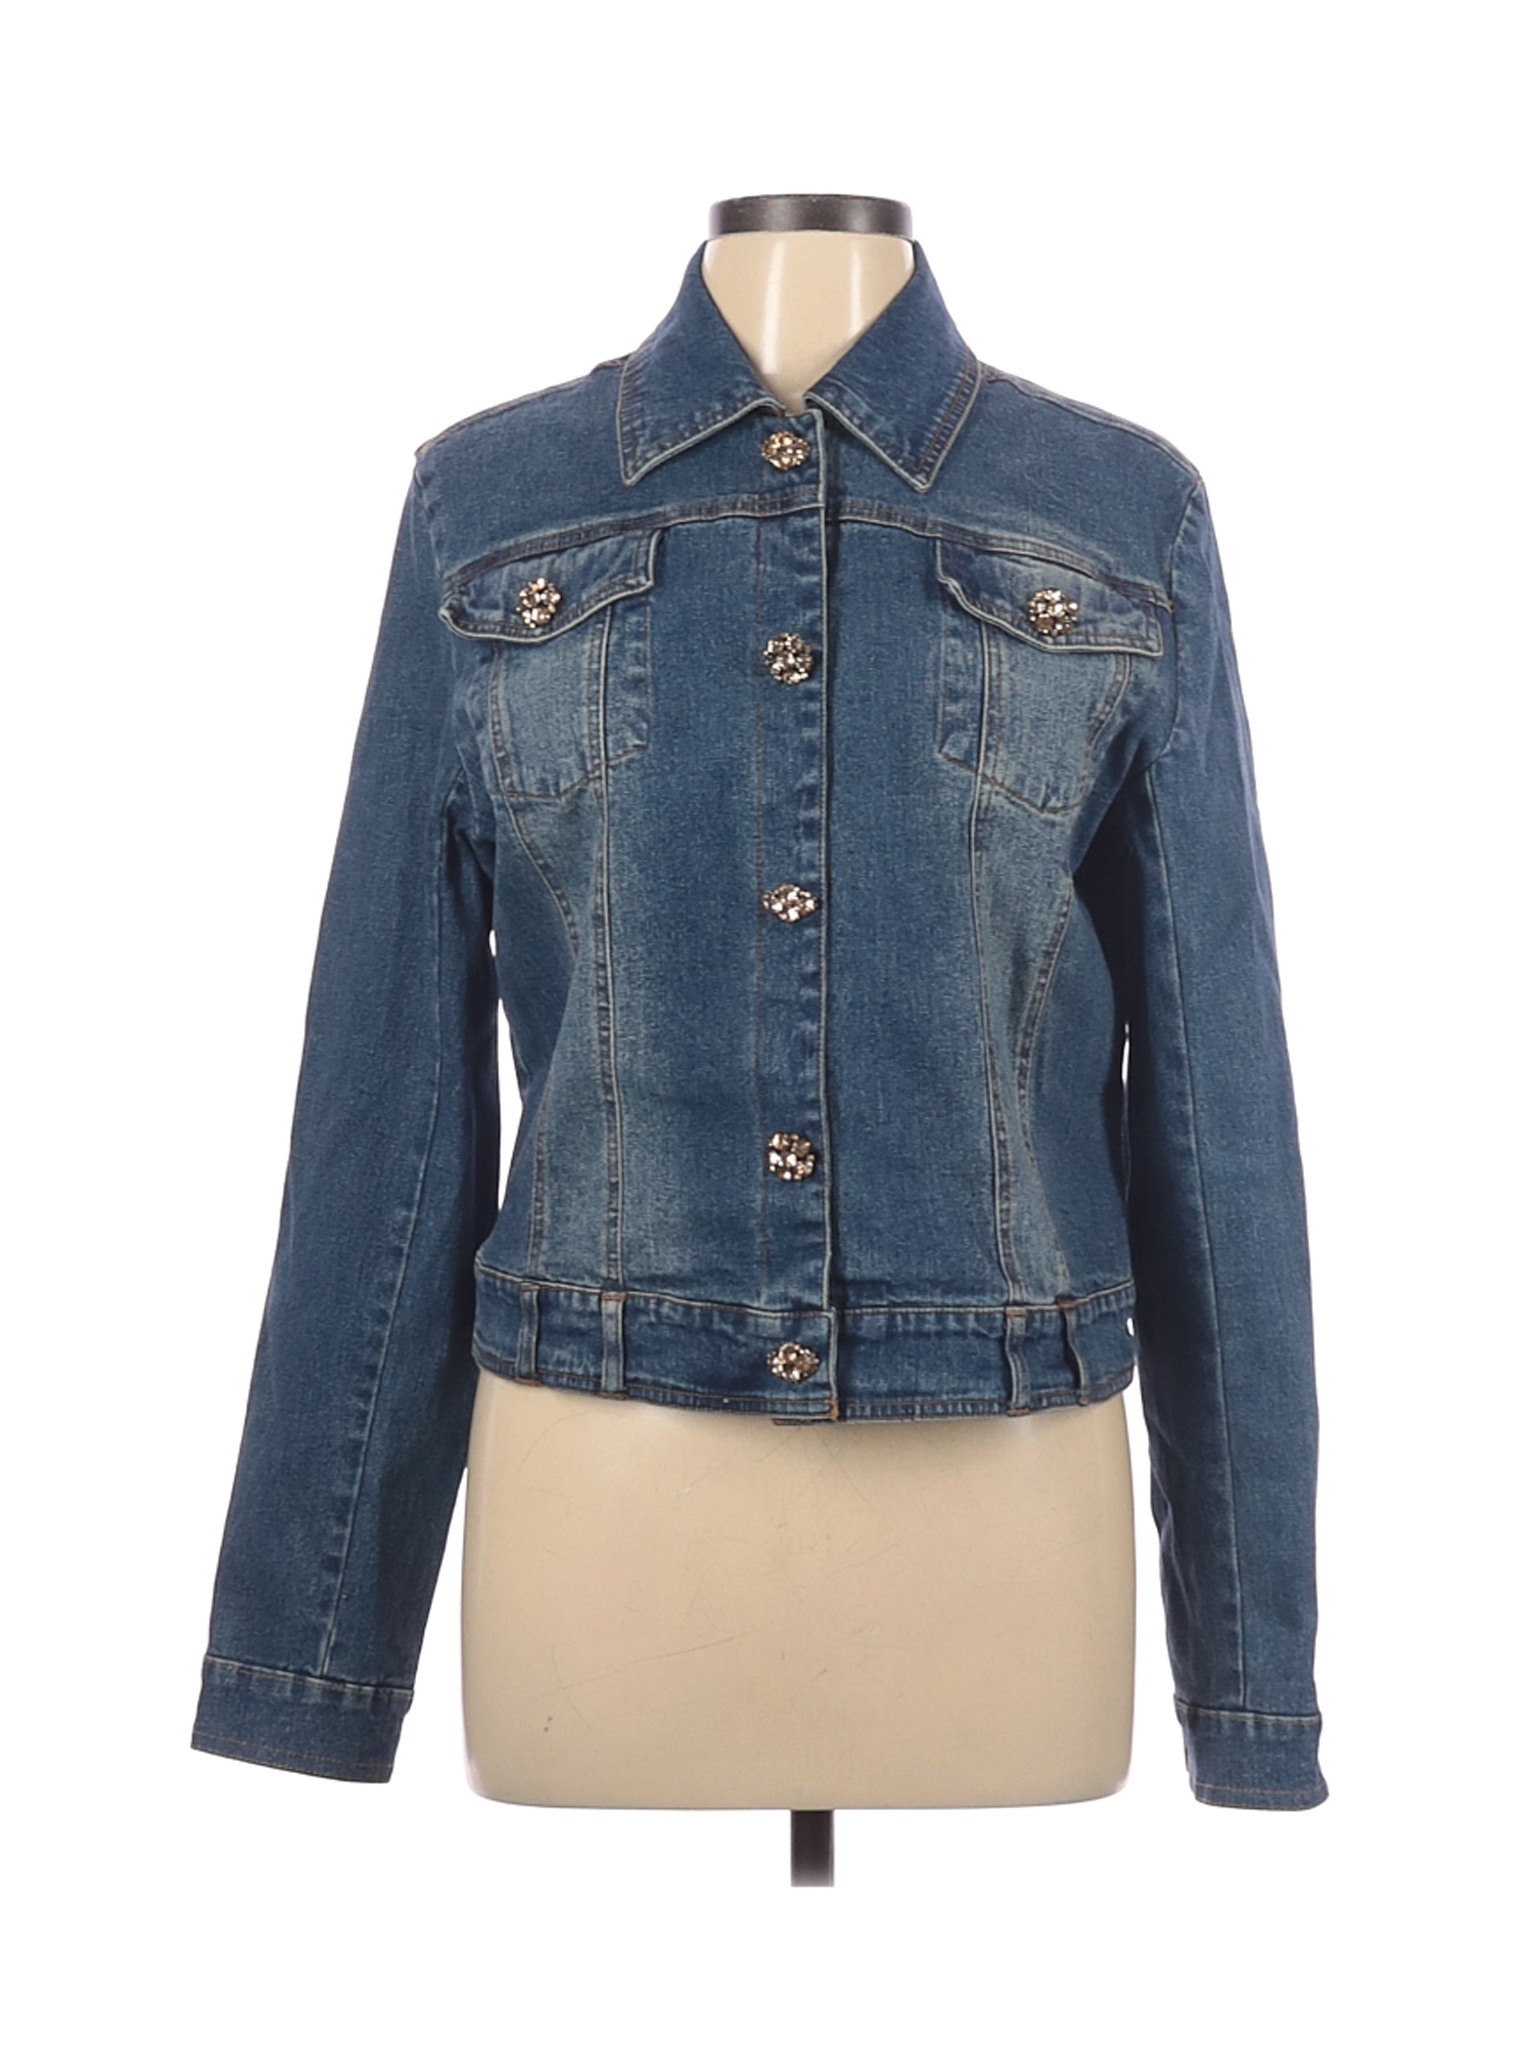 Berek Women Blue Denim Jacket L | eBay